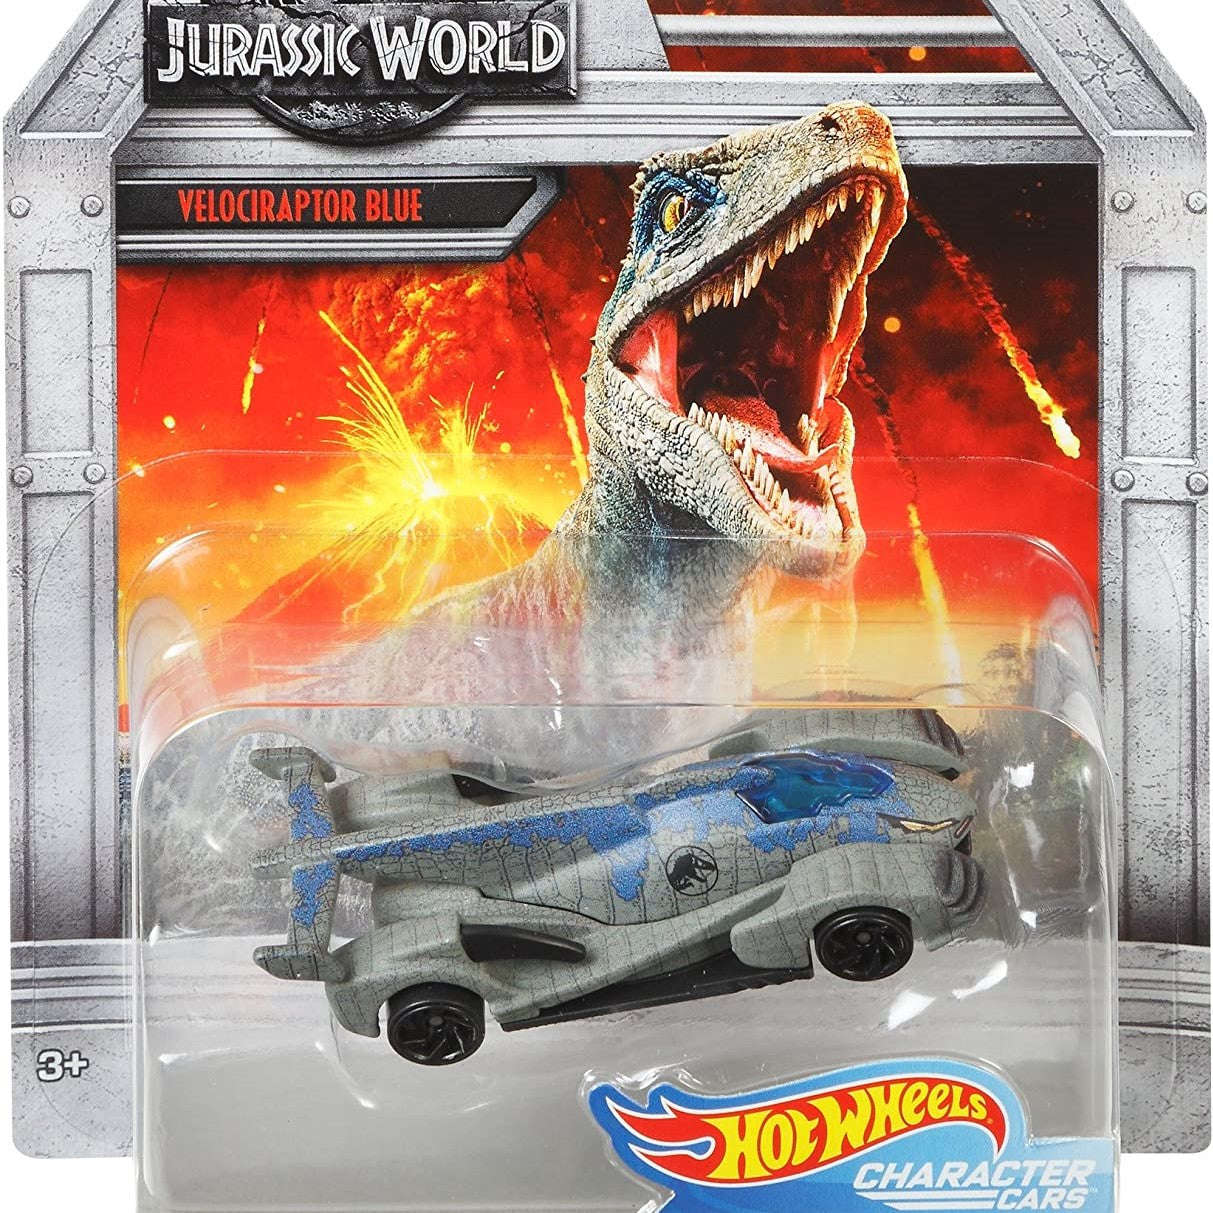 Hot Wheels Character Cars: Jurassic World Velociraptor "Blue" Raptor: 1:64 Scale